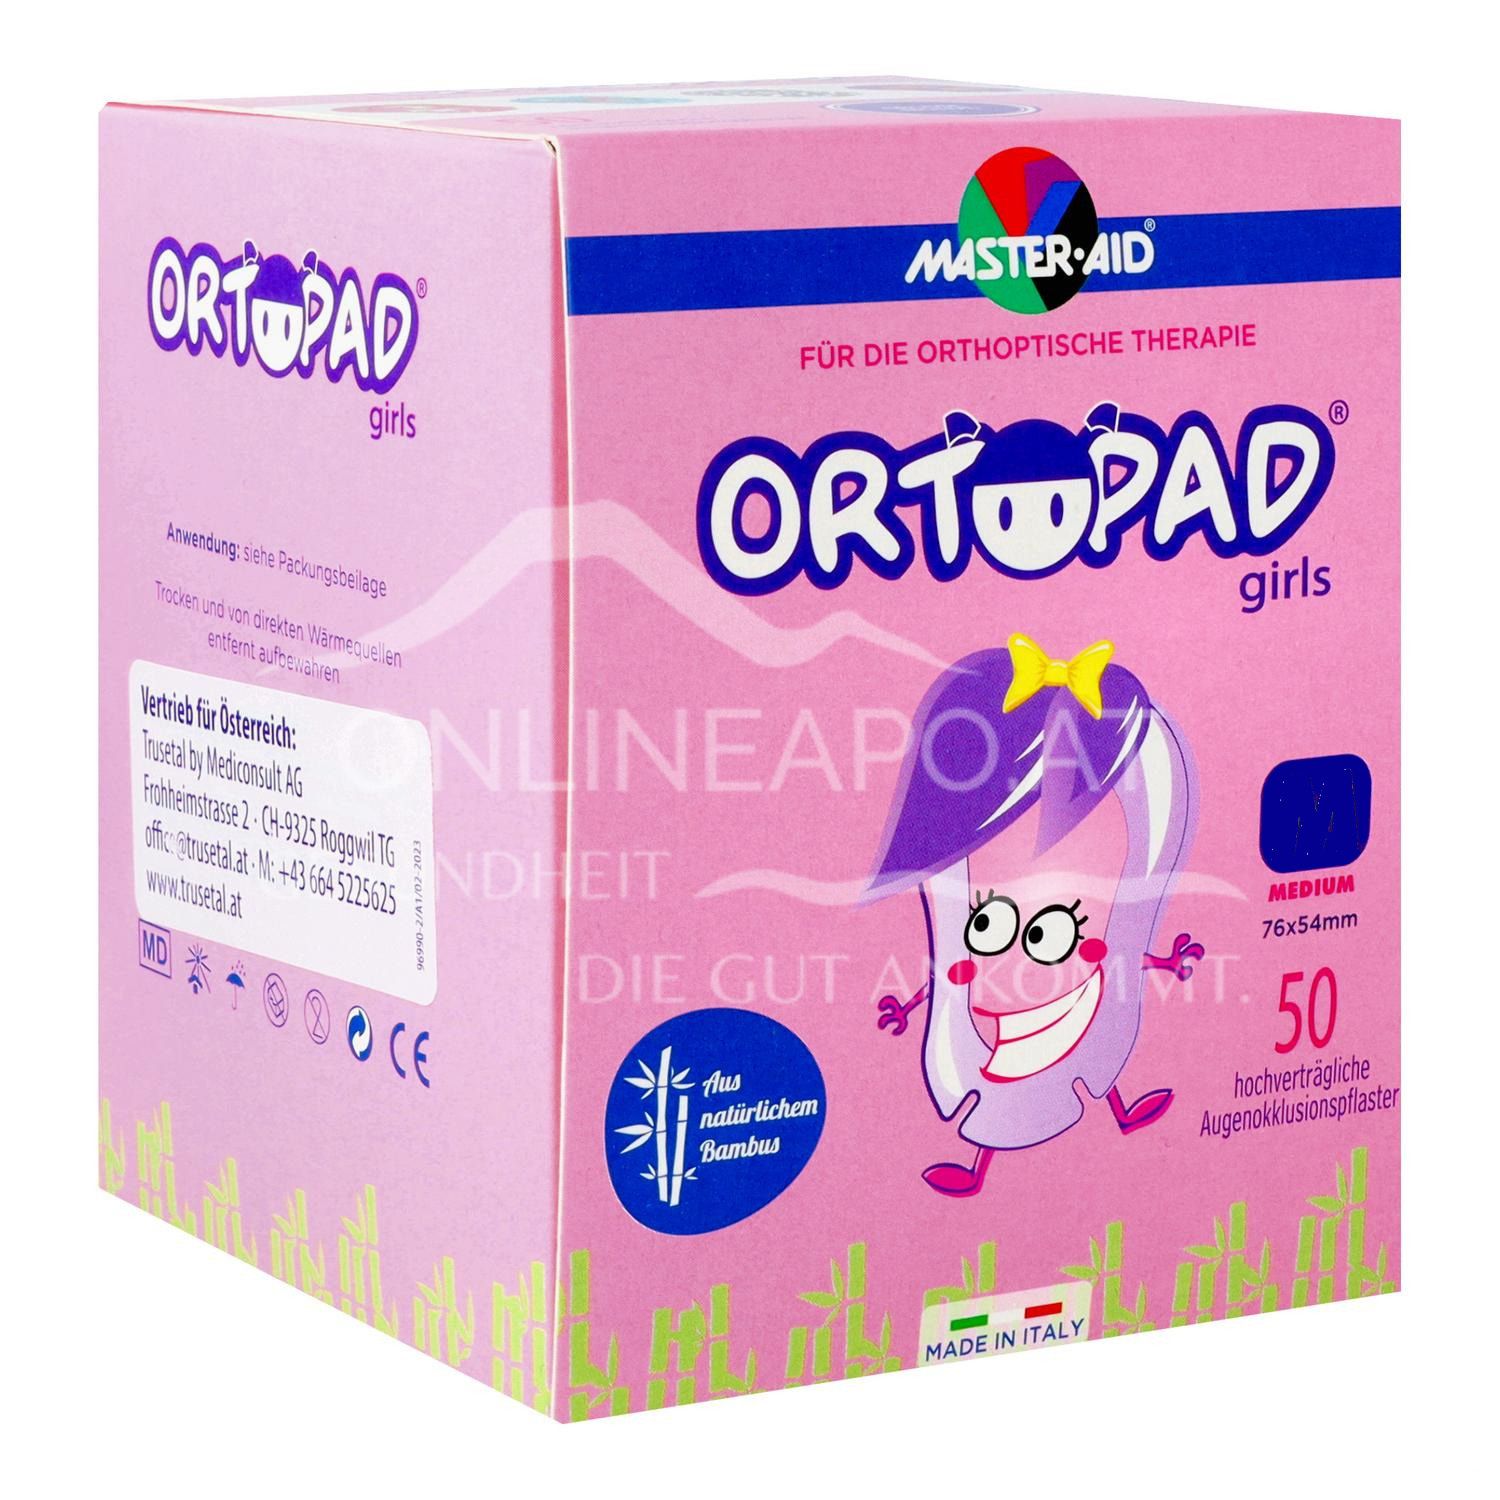 ORTOPAD® girls Augenokklusionspflaster